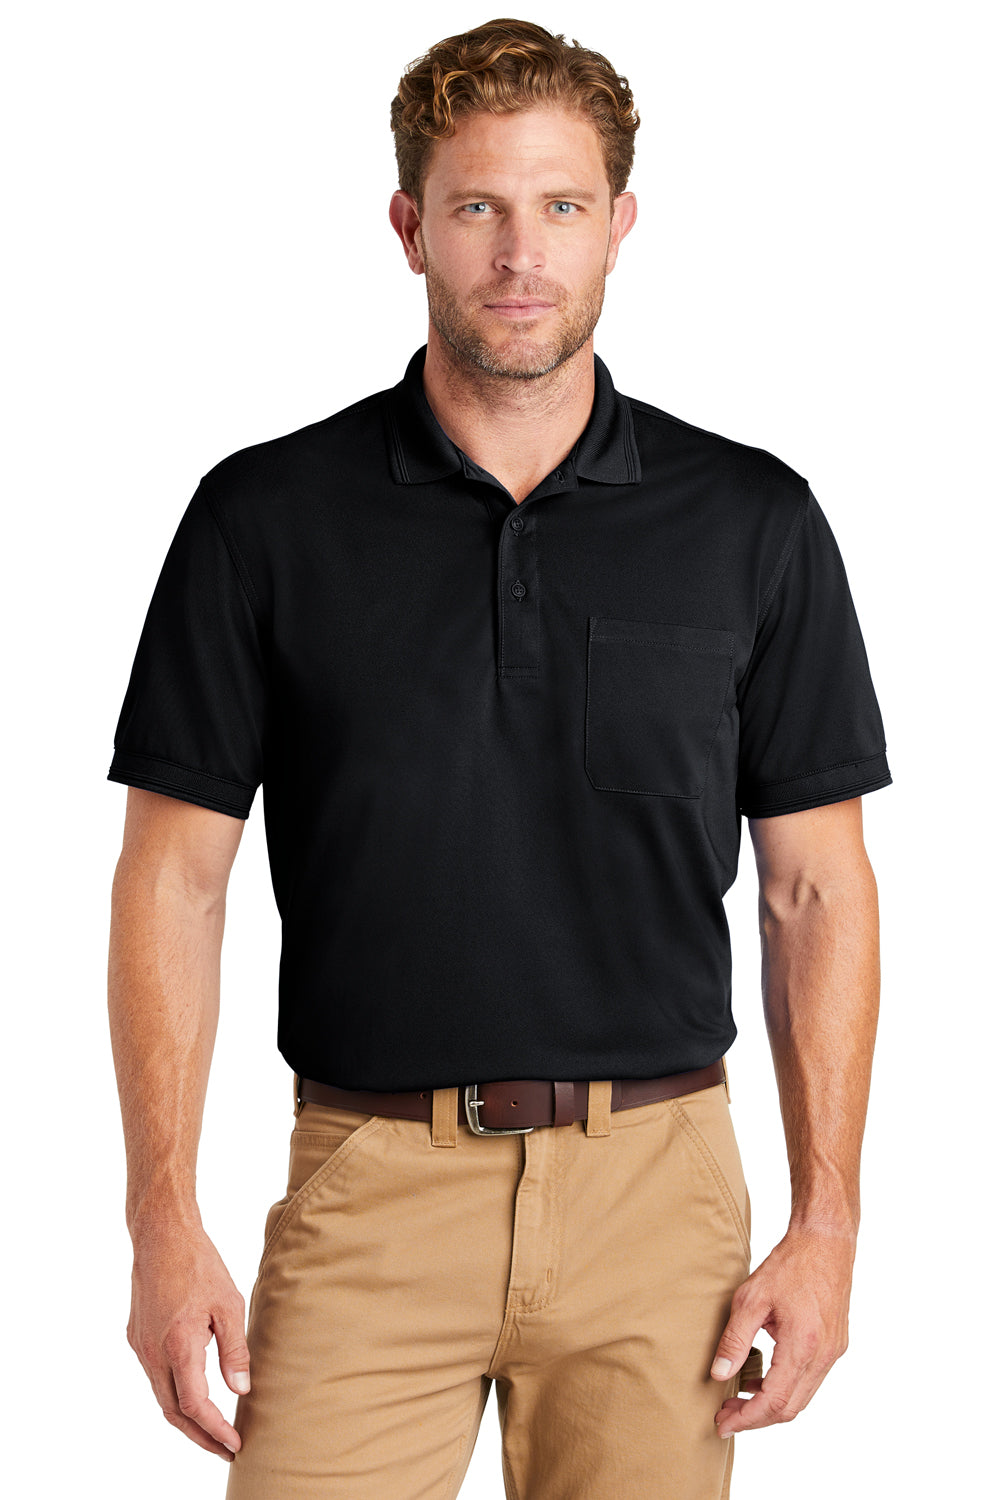 CornerStone CS4020P Mens Industrial Moisture Wicking Short Sleeve Polo Shirt w/ Pocket Navy Blue Front